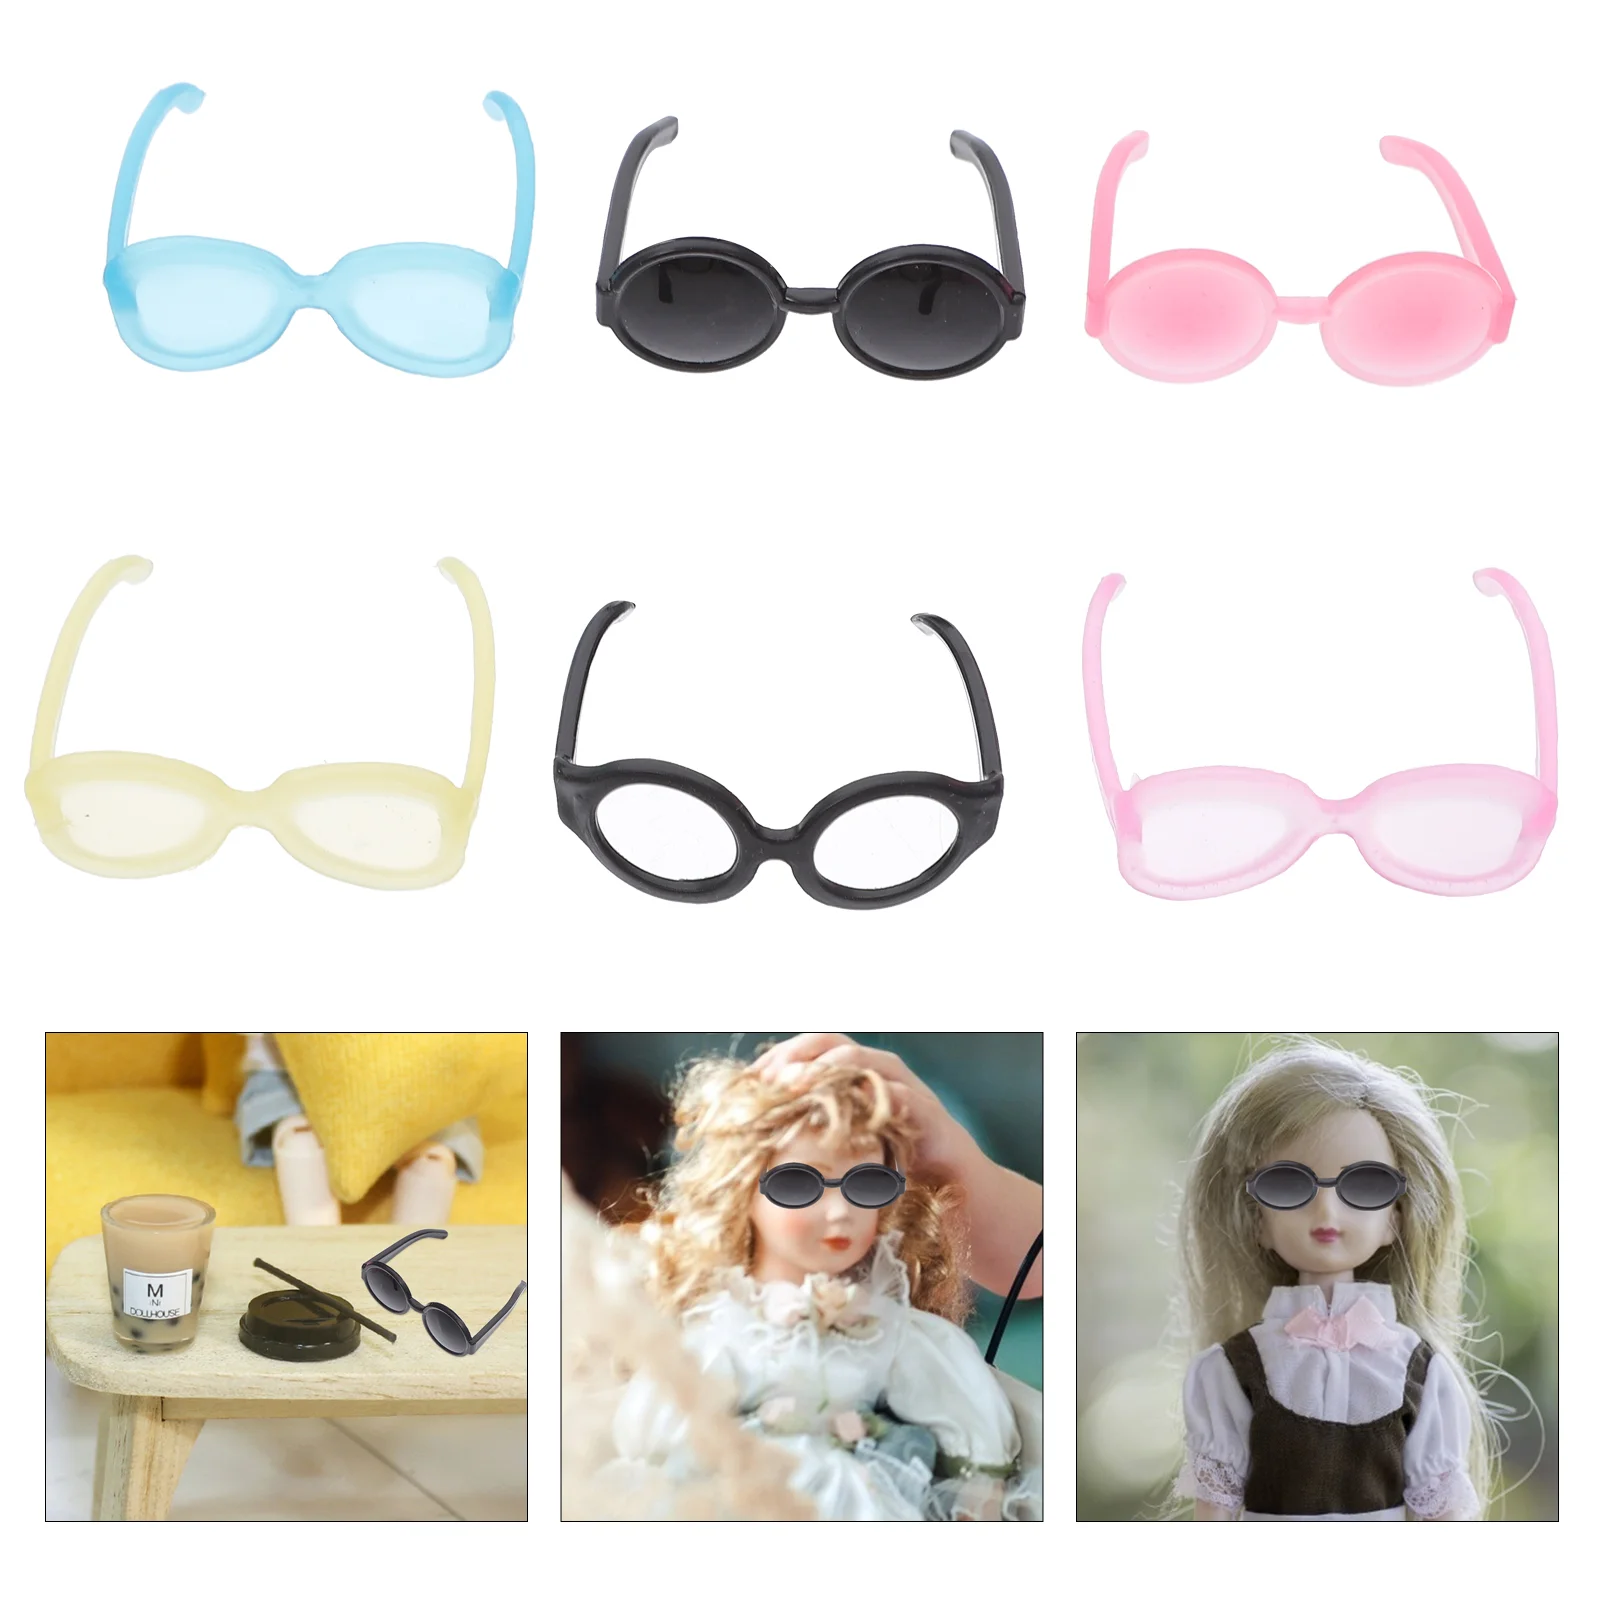 

Glasses Sunglassesminieyeglasses Accessories Inch Dressing Crafts Miniatureplastic Babyplay Tiny Costume Dressprops Supplies Pet